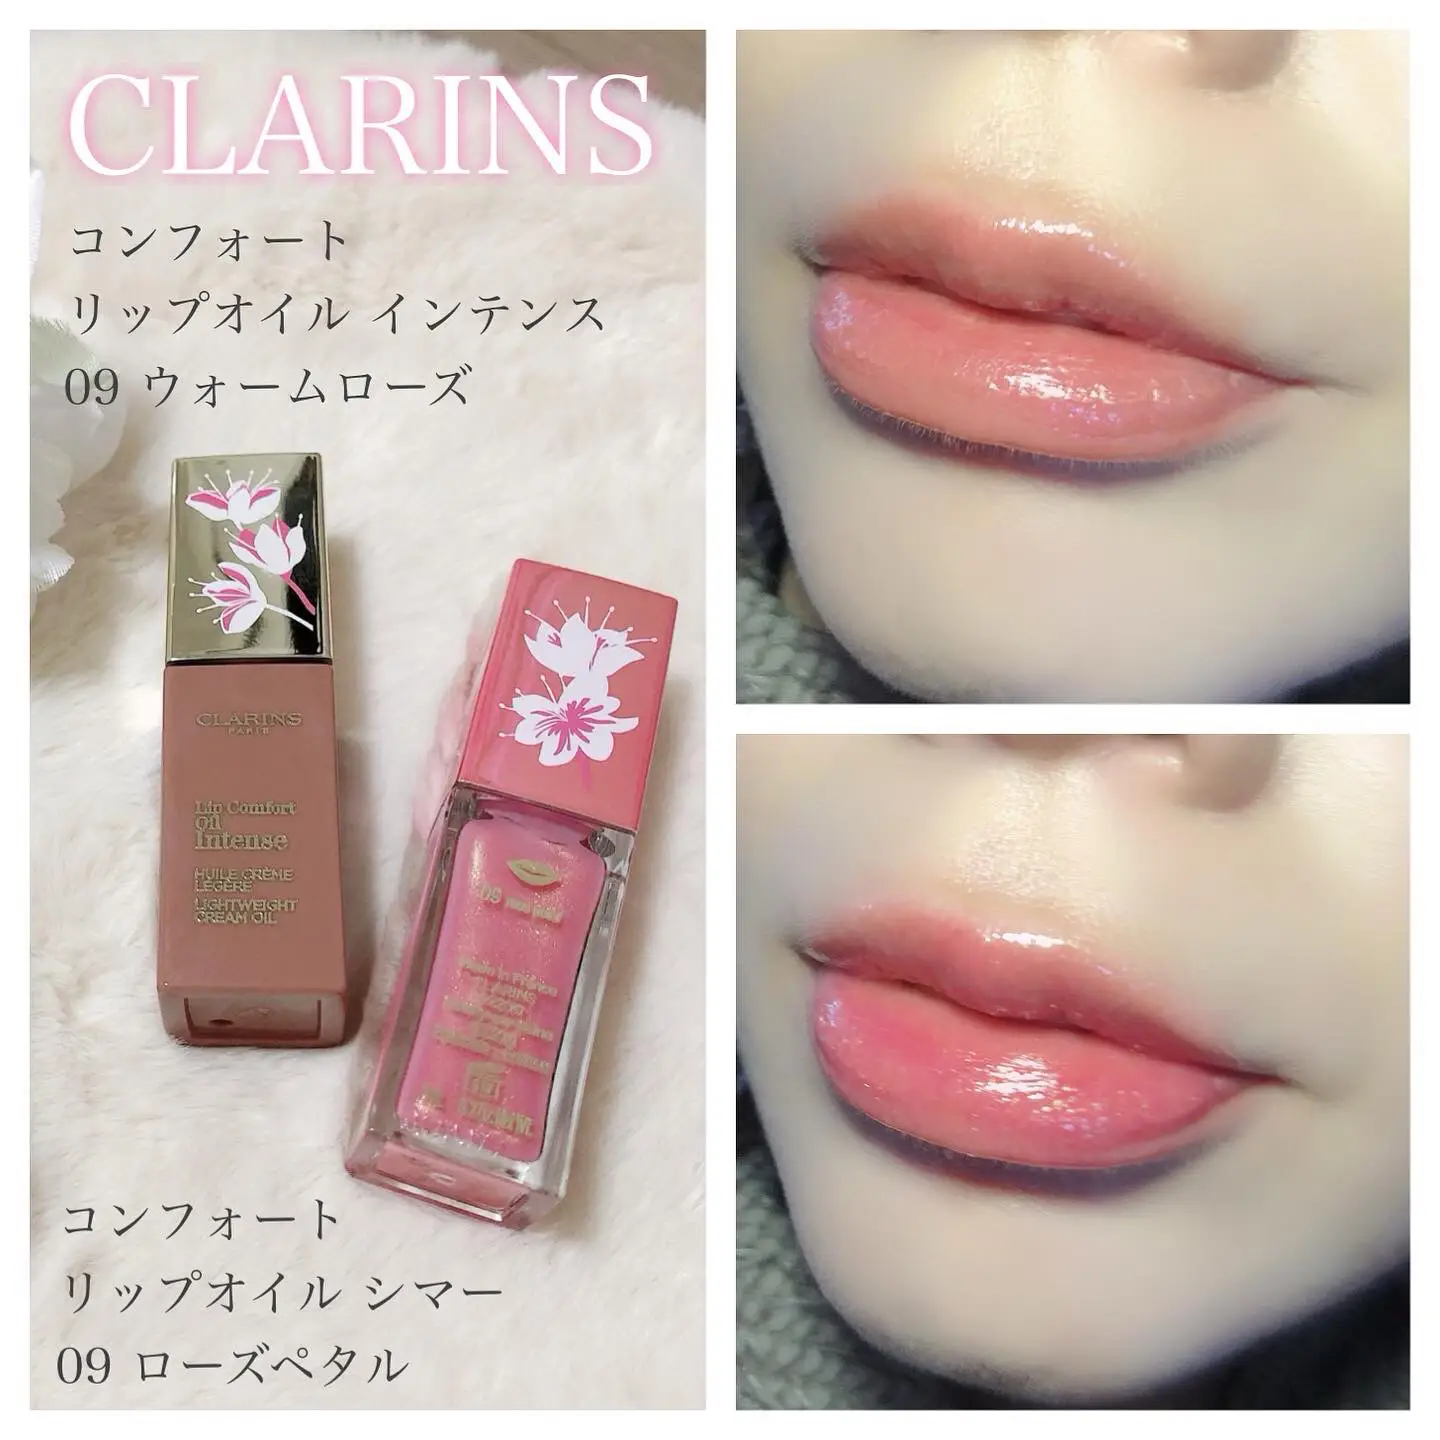 CLARINS ♡Lucky Glow Collection♡ | momono_uchiが投稿したフォト ...